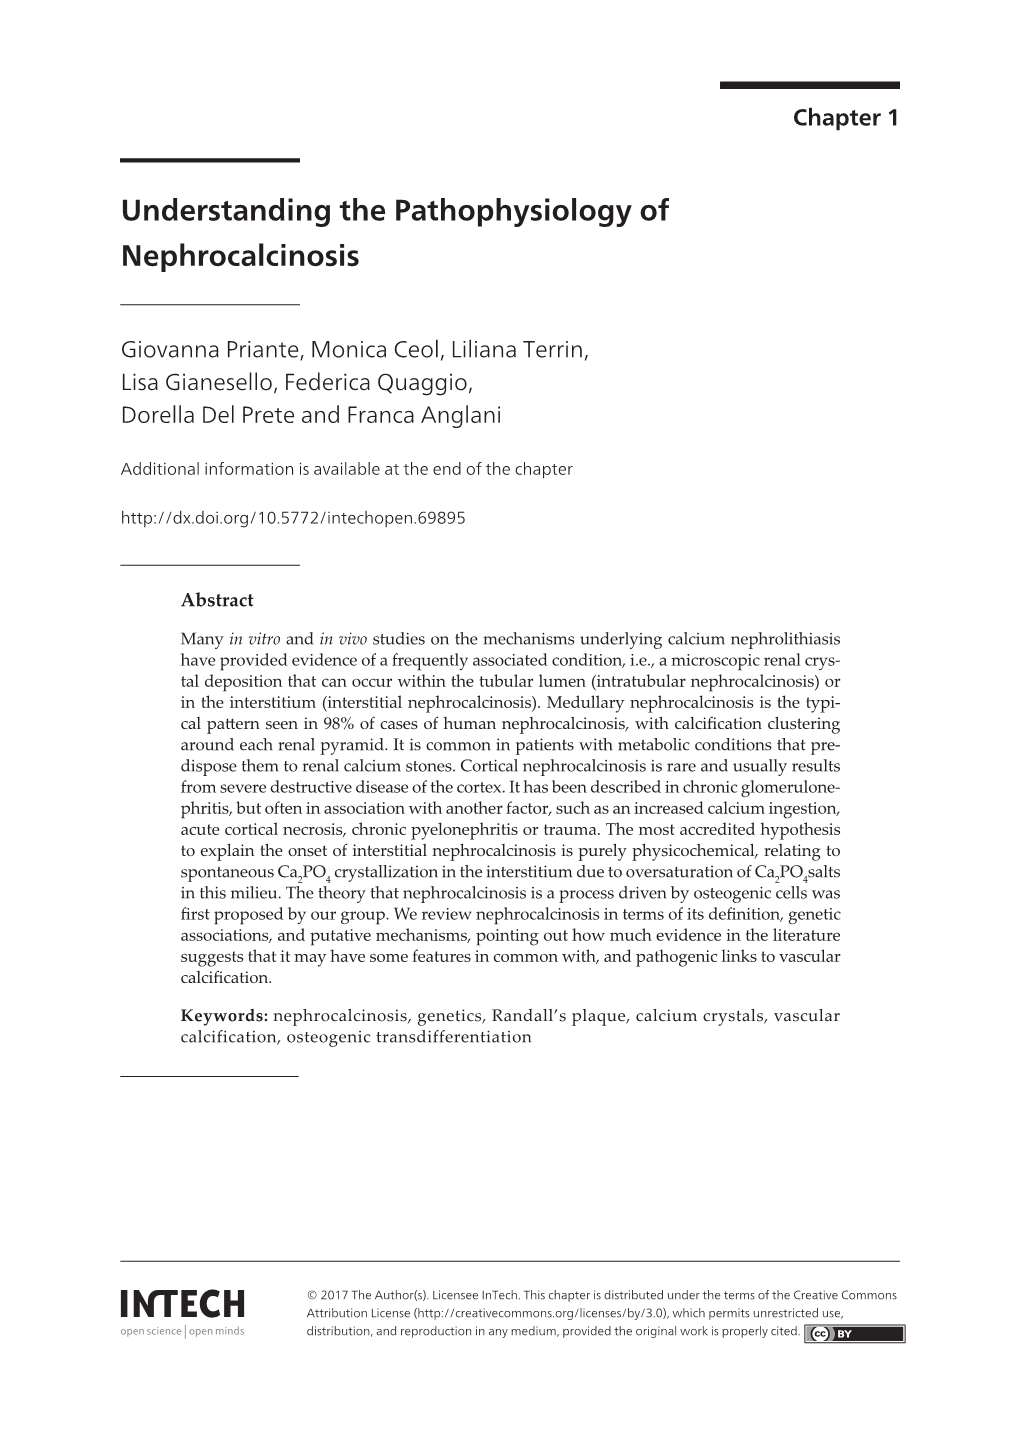 Understanding the Pathophysiology of Nephrocalcinosis